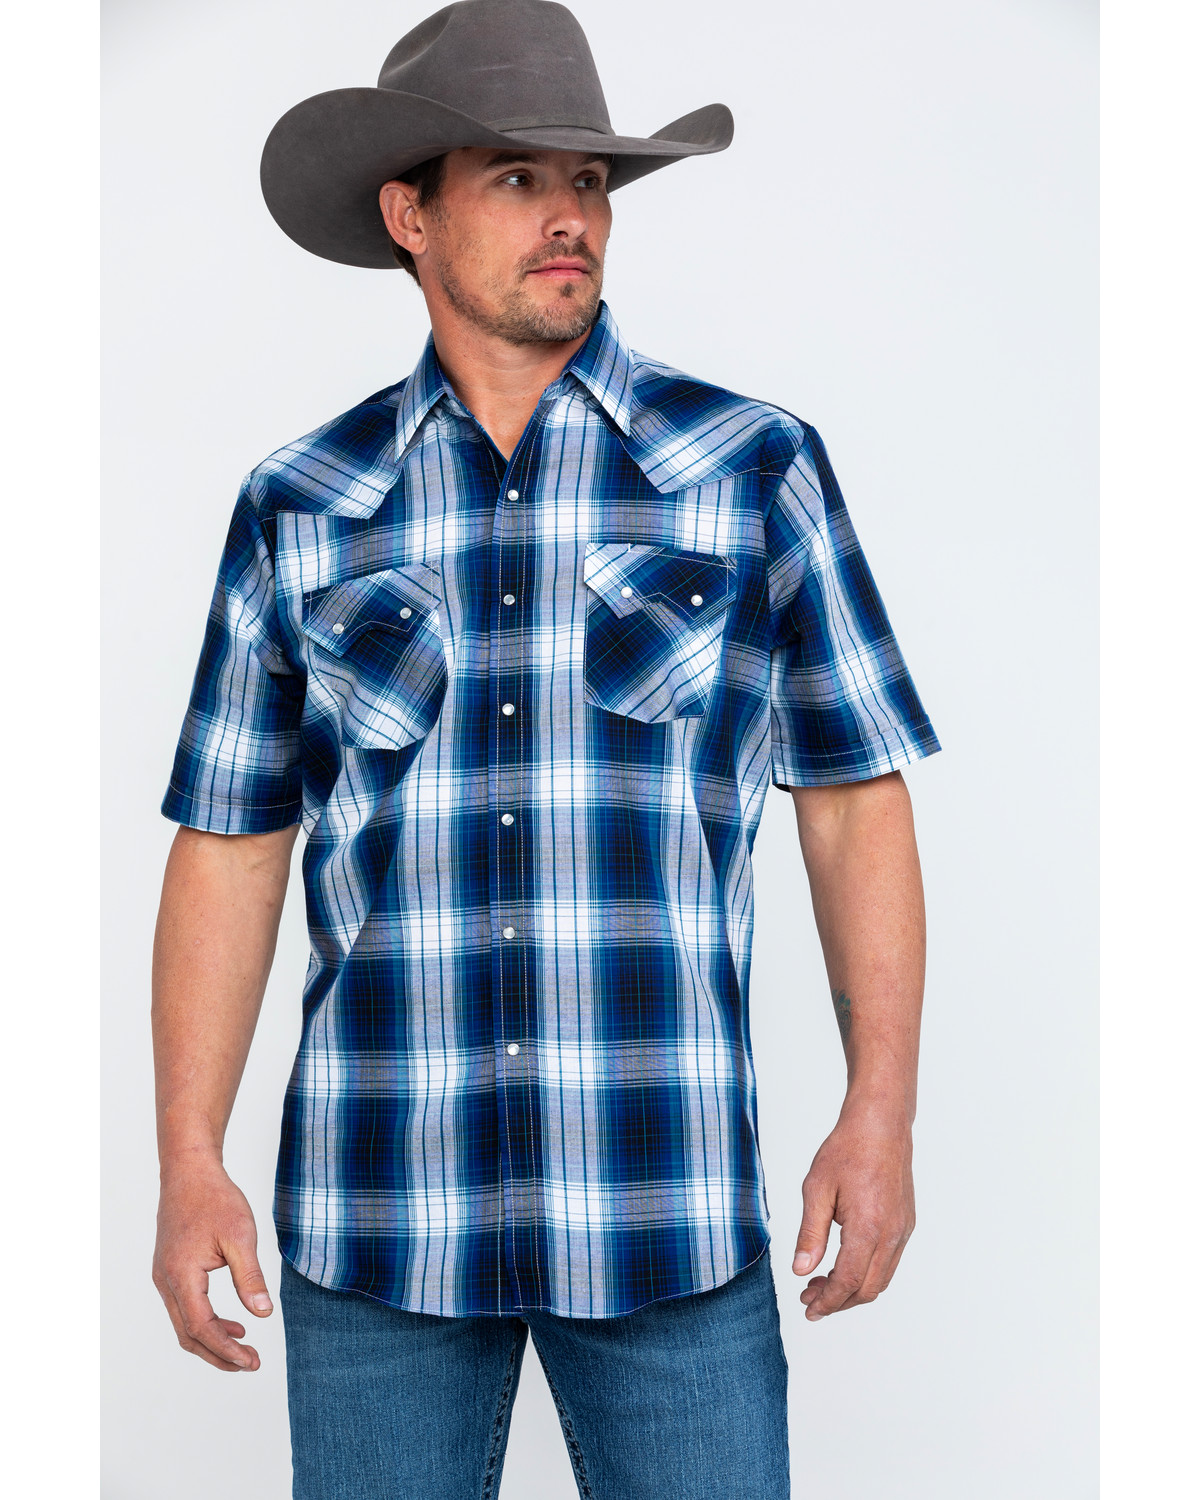 ELY CATTLEMAN Mens Short Sleeve Plaid Western Shirt